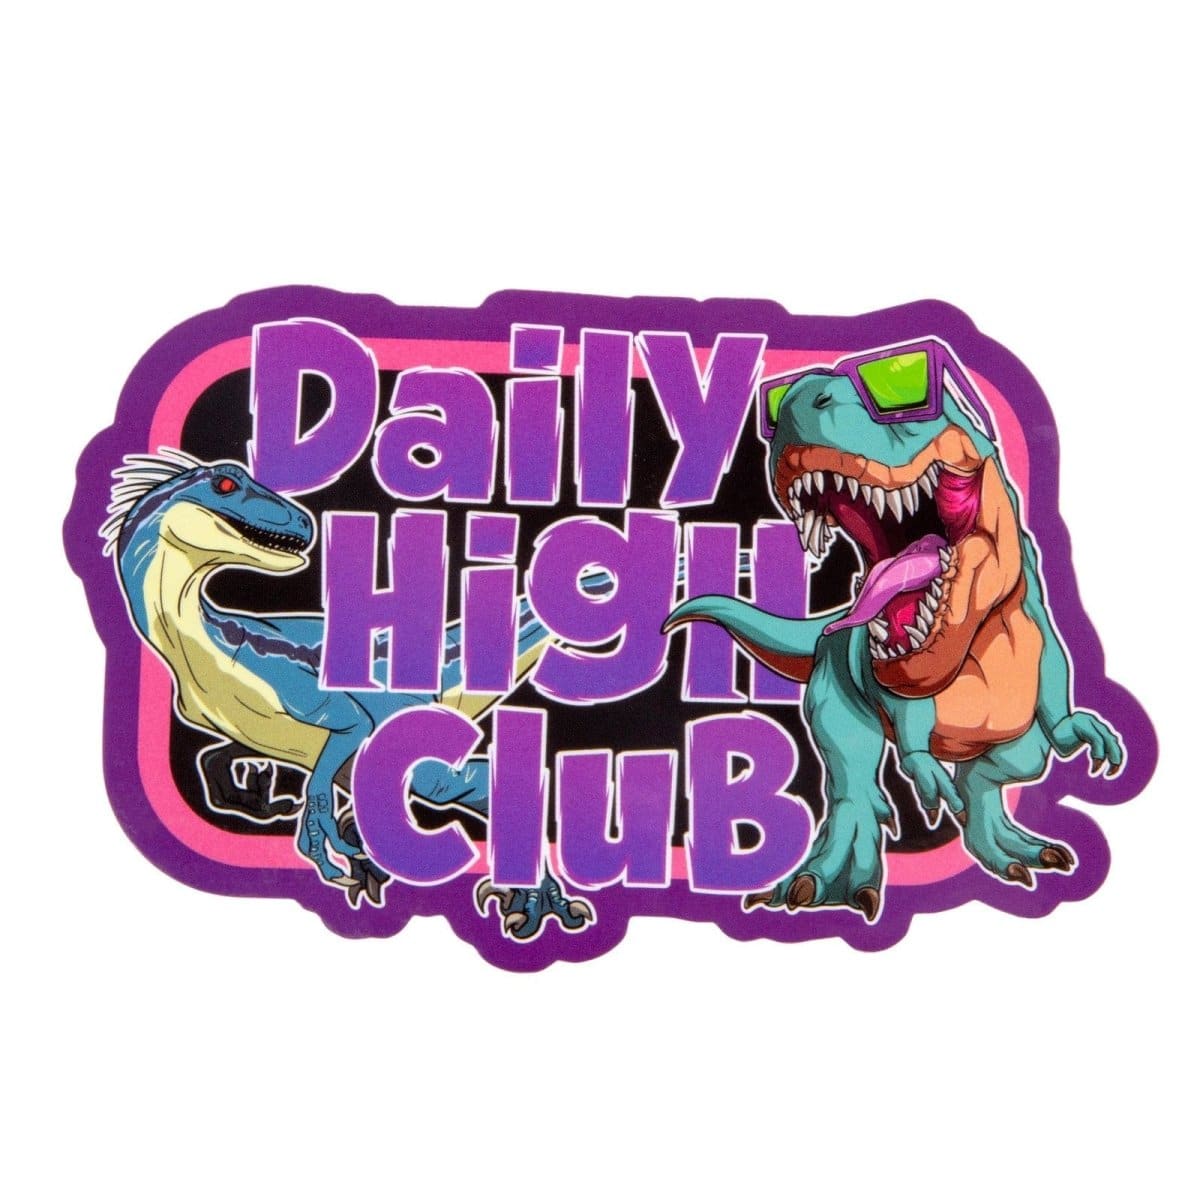 Daily High Club subscription box 